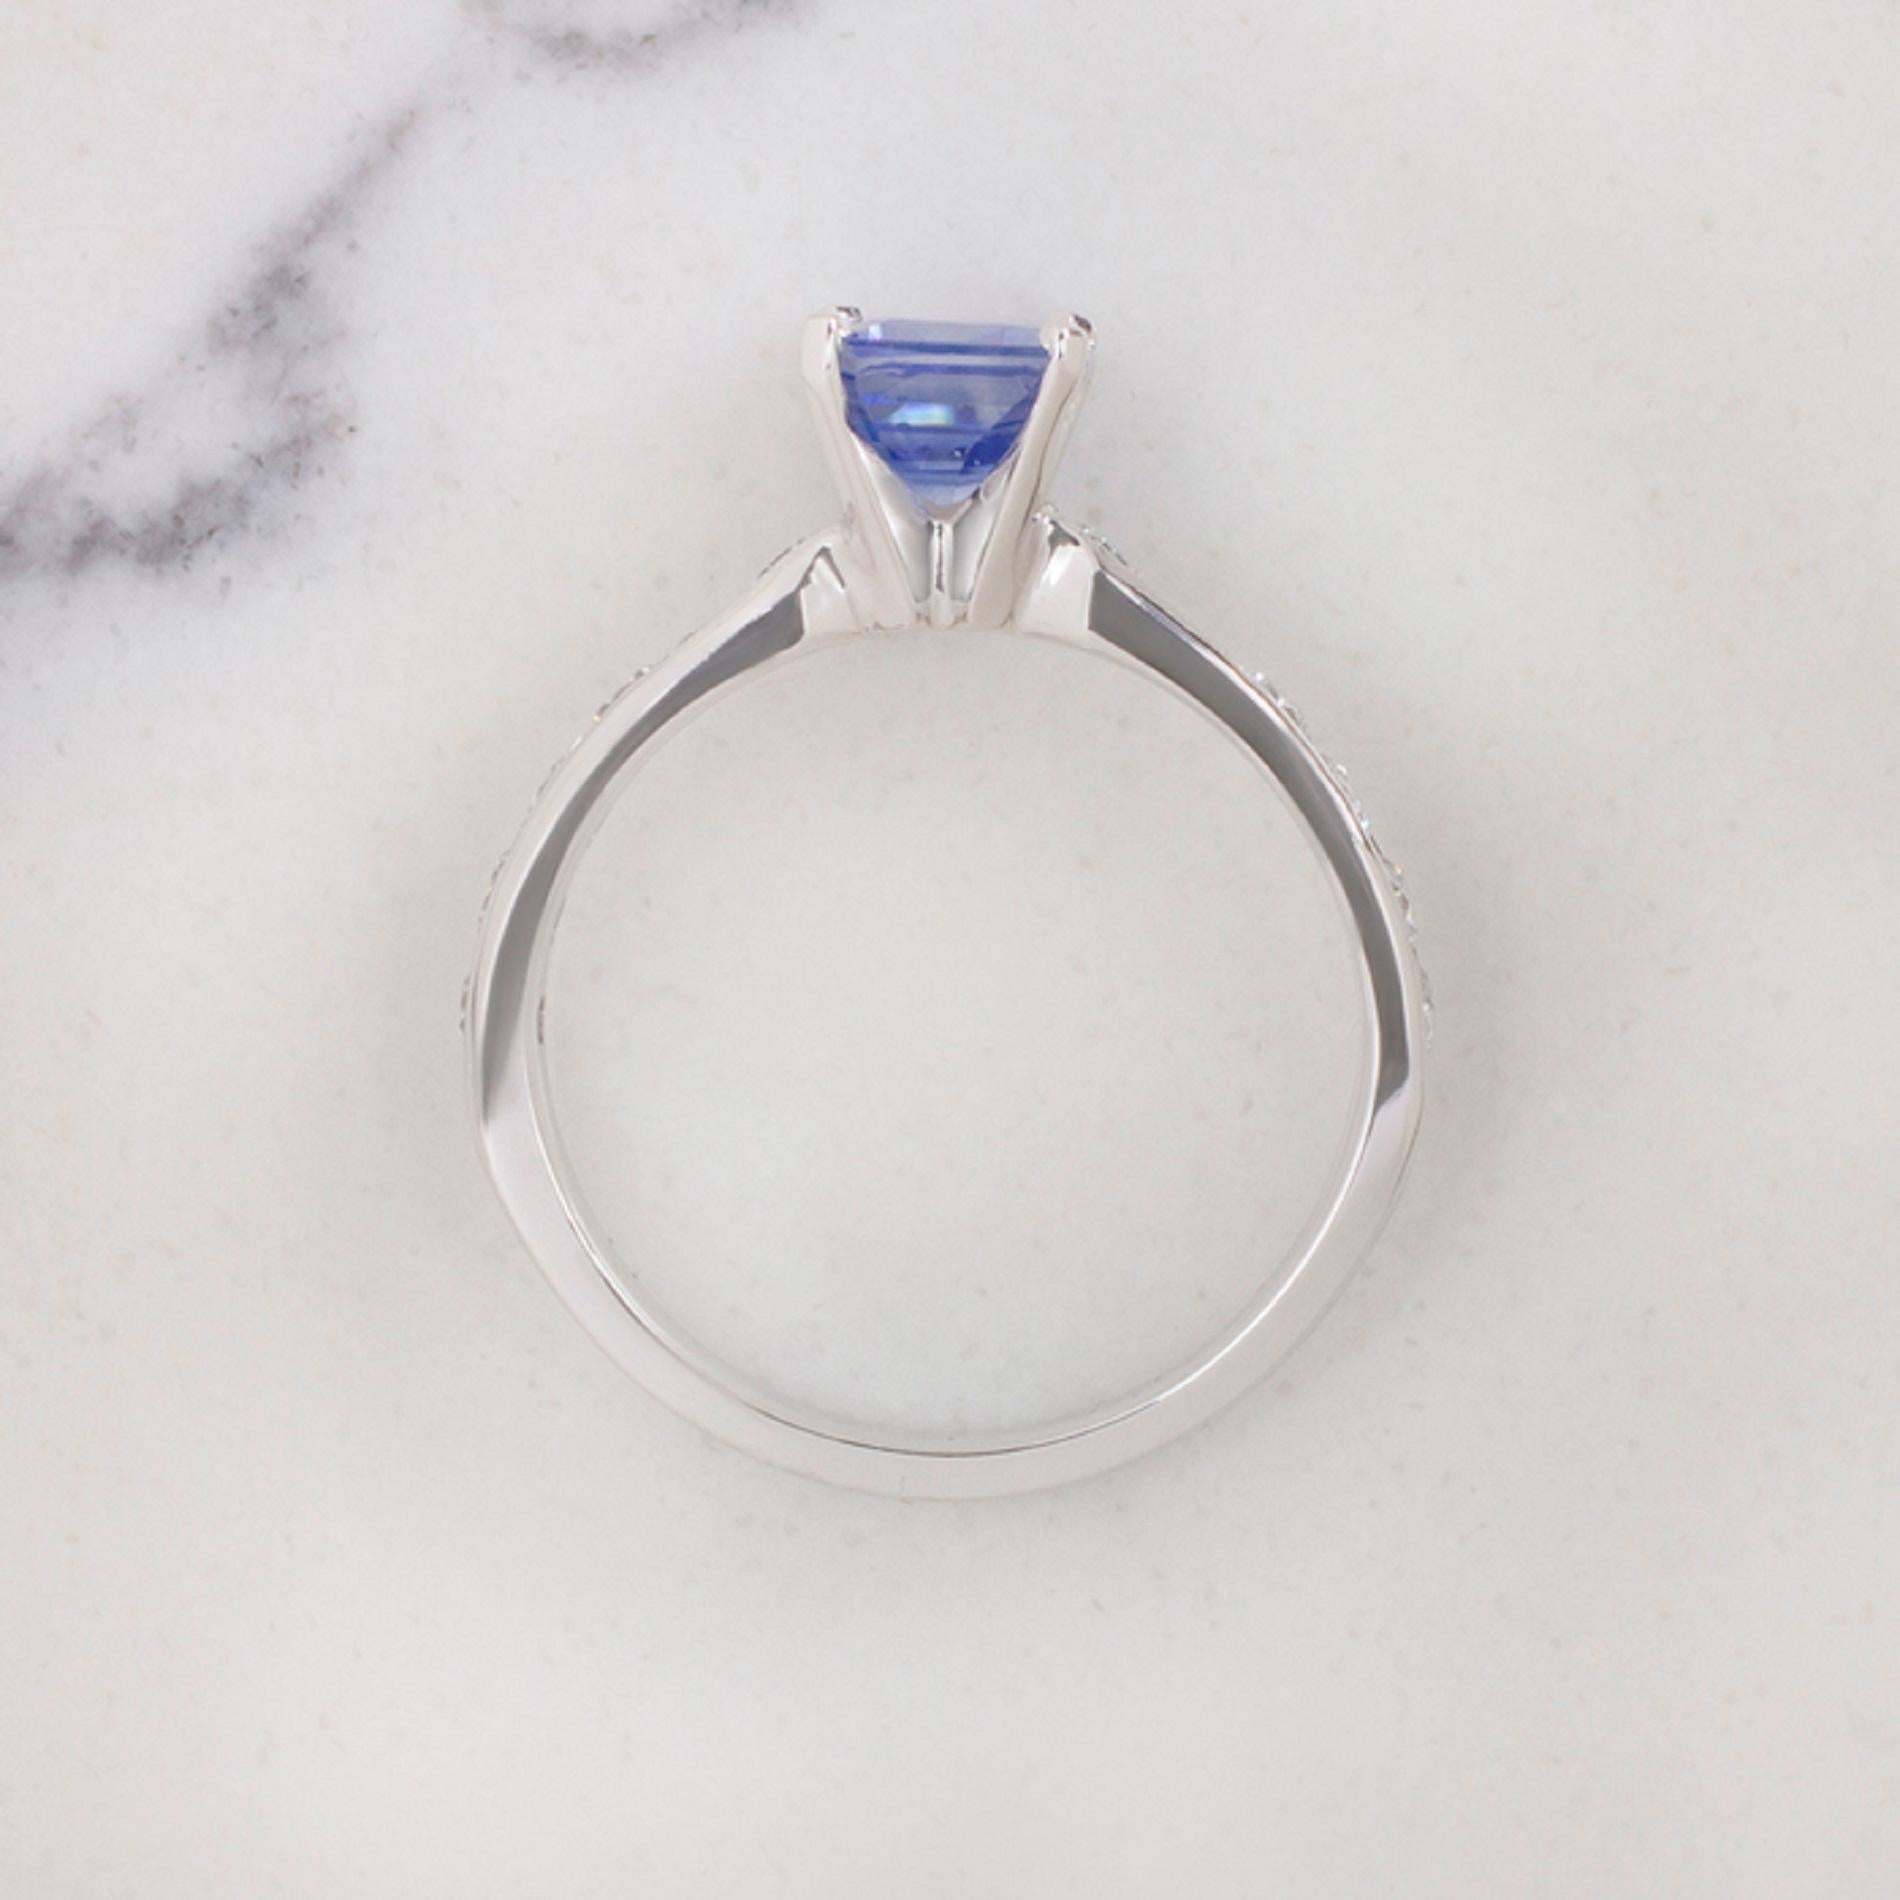 Modern 1.28 Carat Natural Sapphire Diamond Solitaire Ring